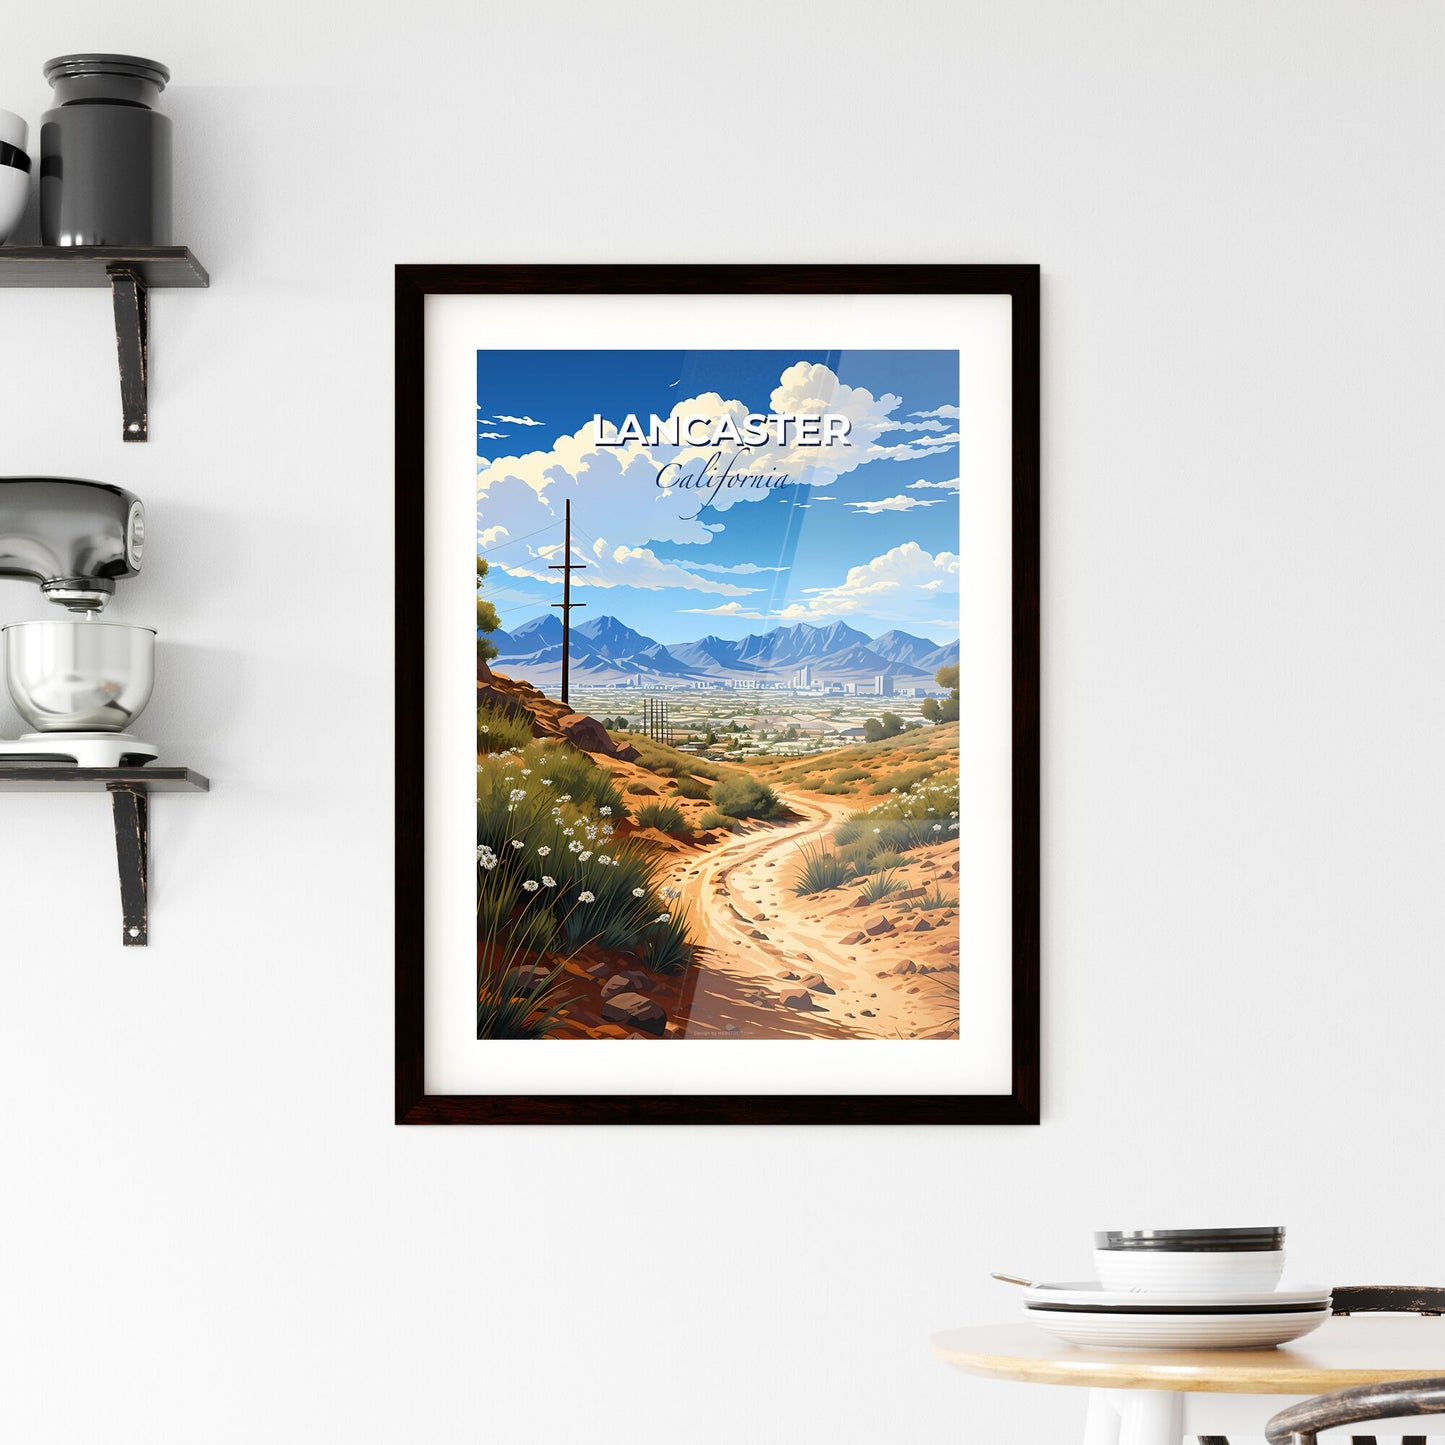 Lancaster, California, A Poster of a dirt road through a desert landscape Default Title